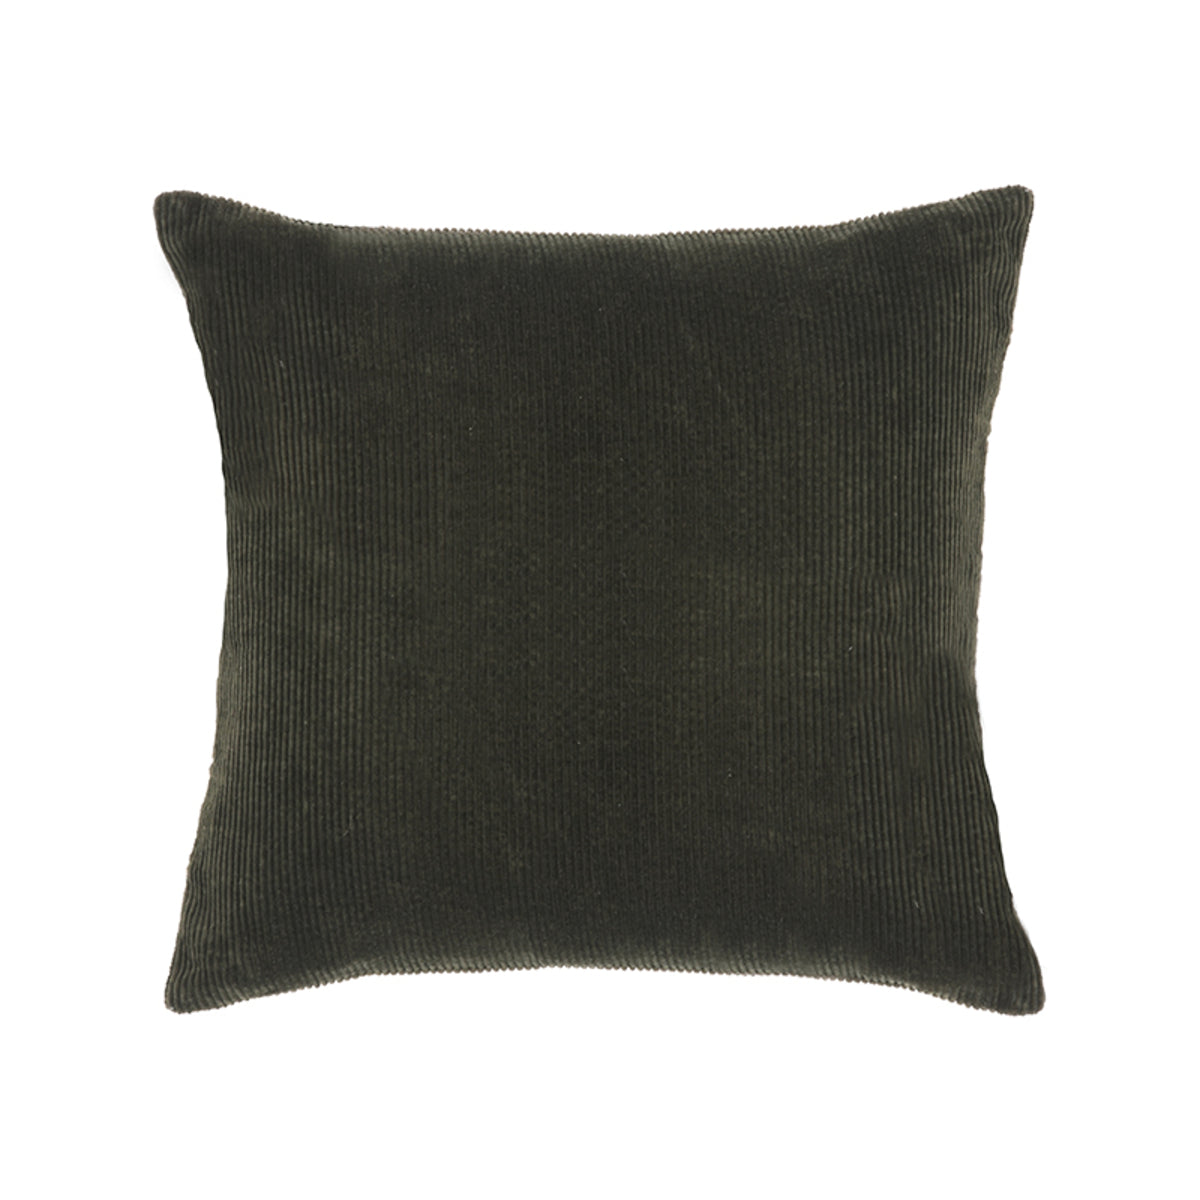 LABEL51 Decorative cushion Rib - Army green - Cotton